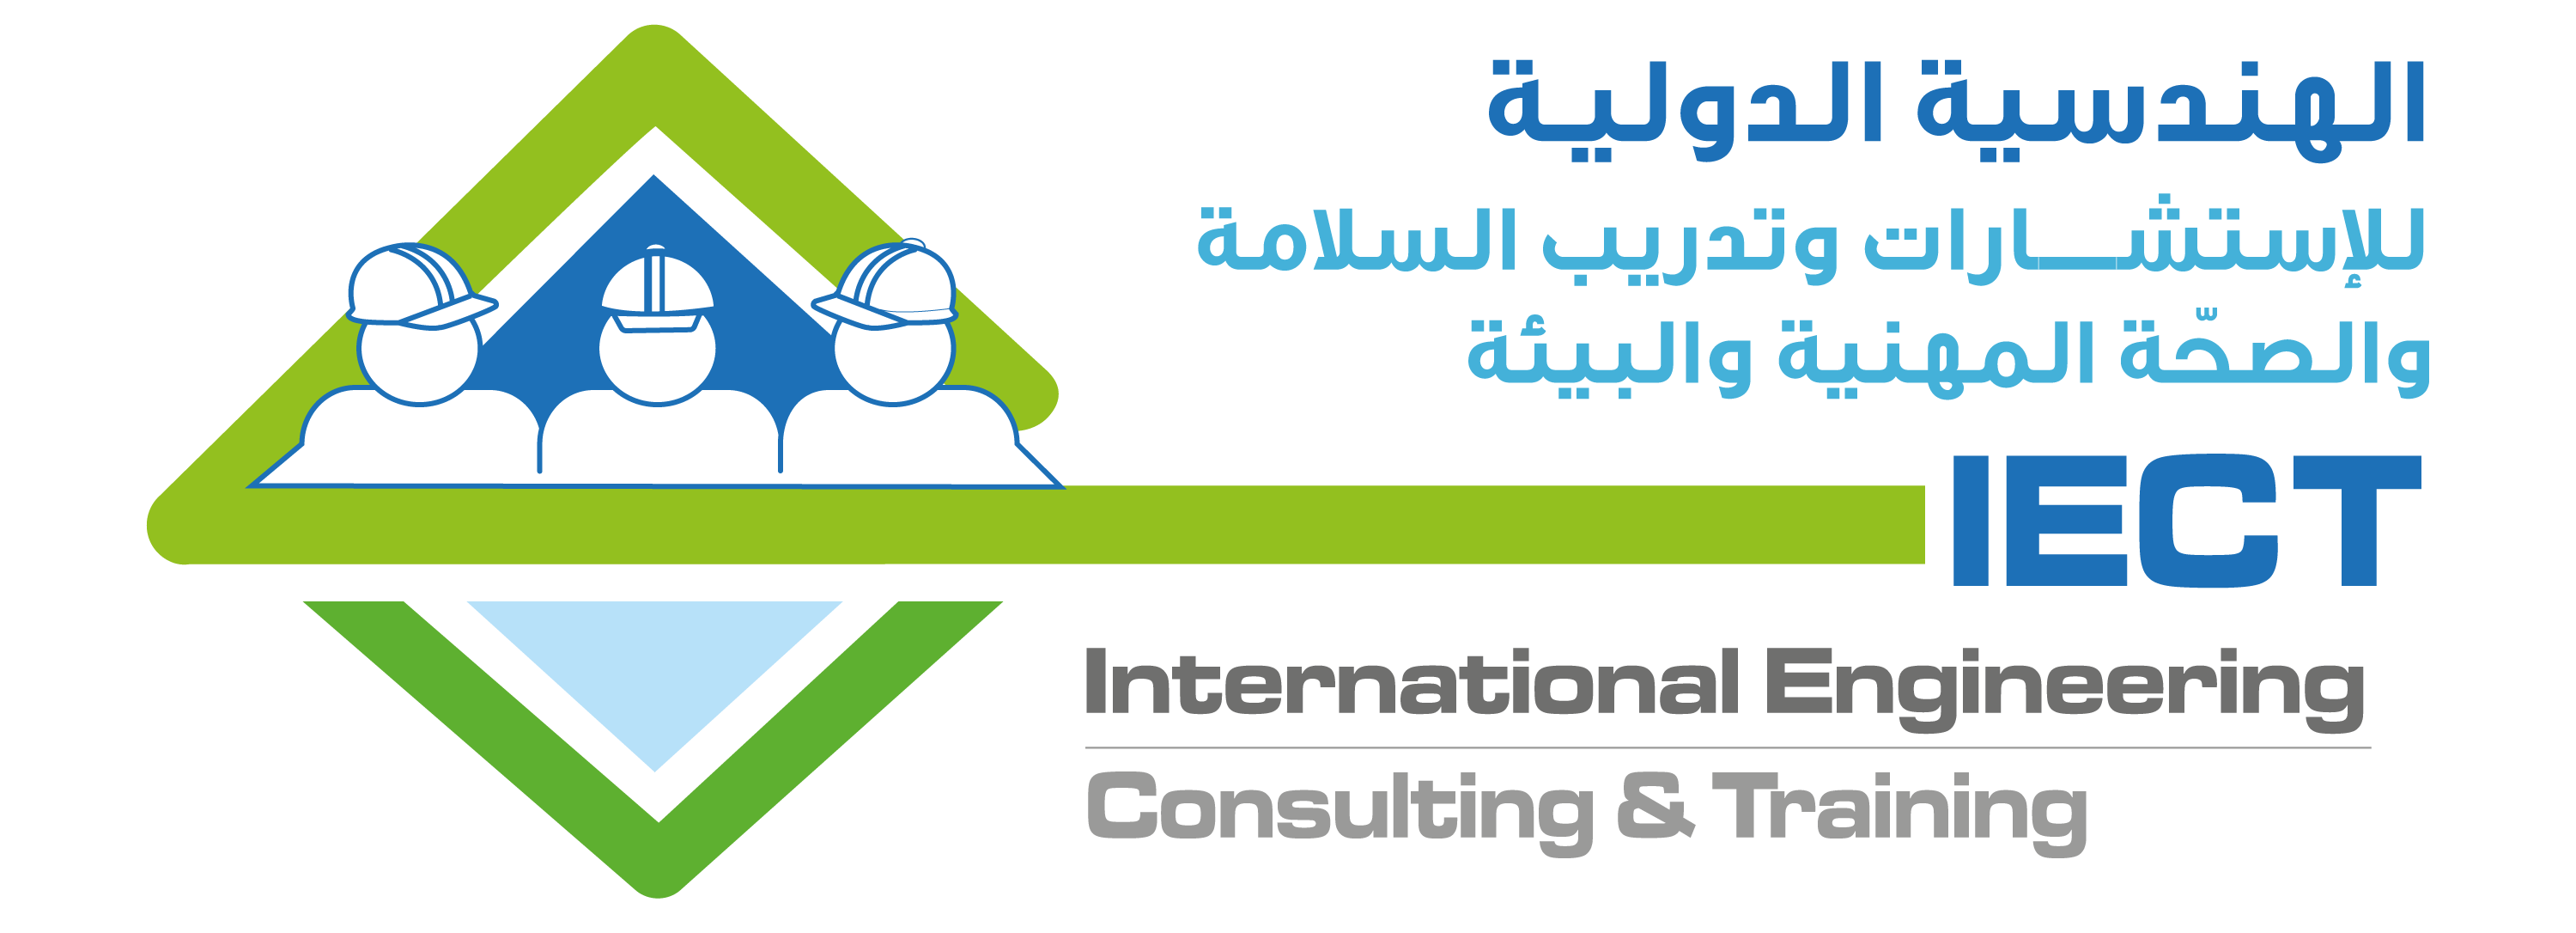 International Engineering Consulting & Training